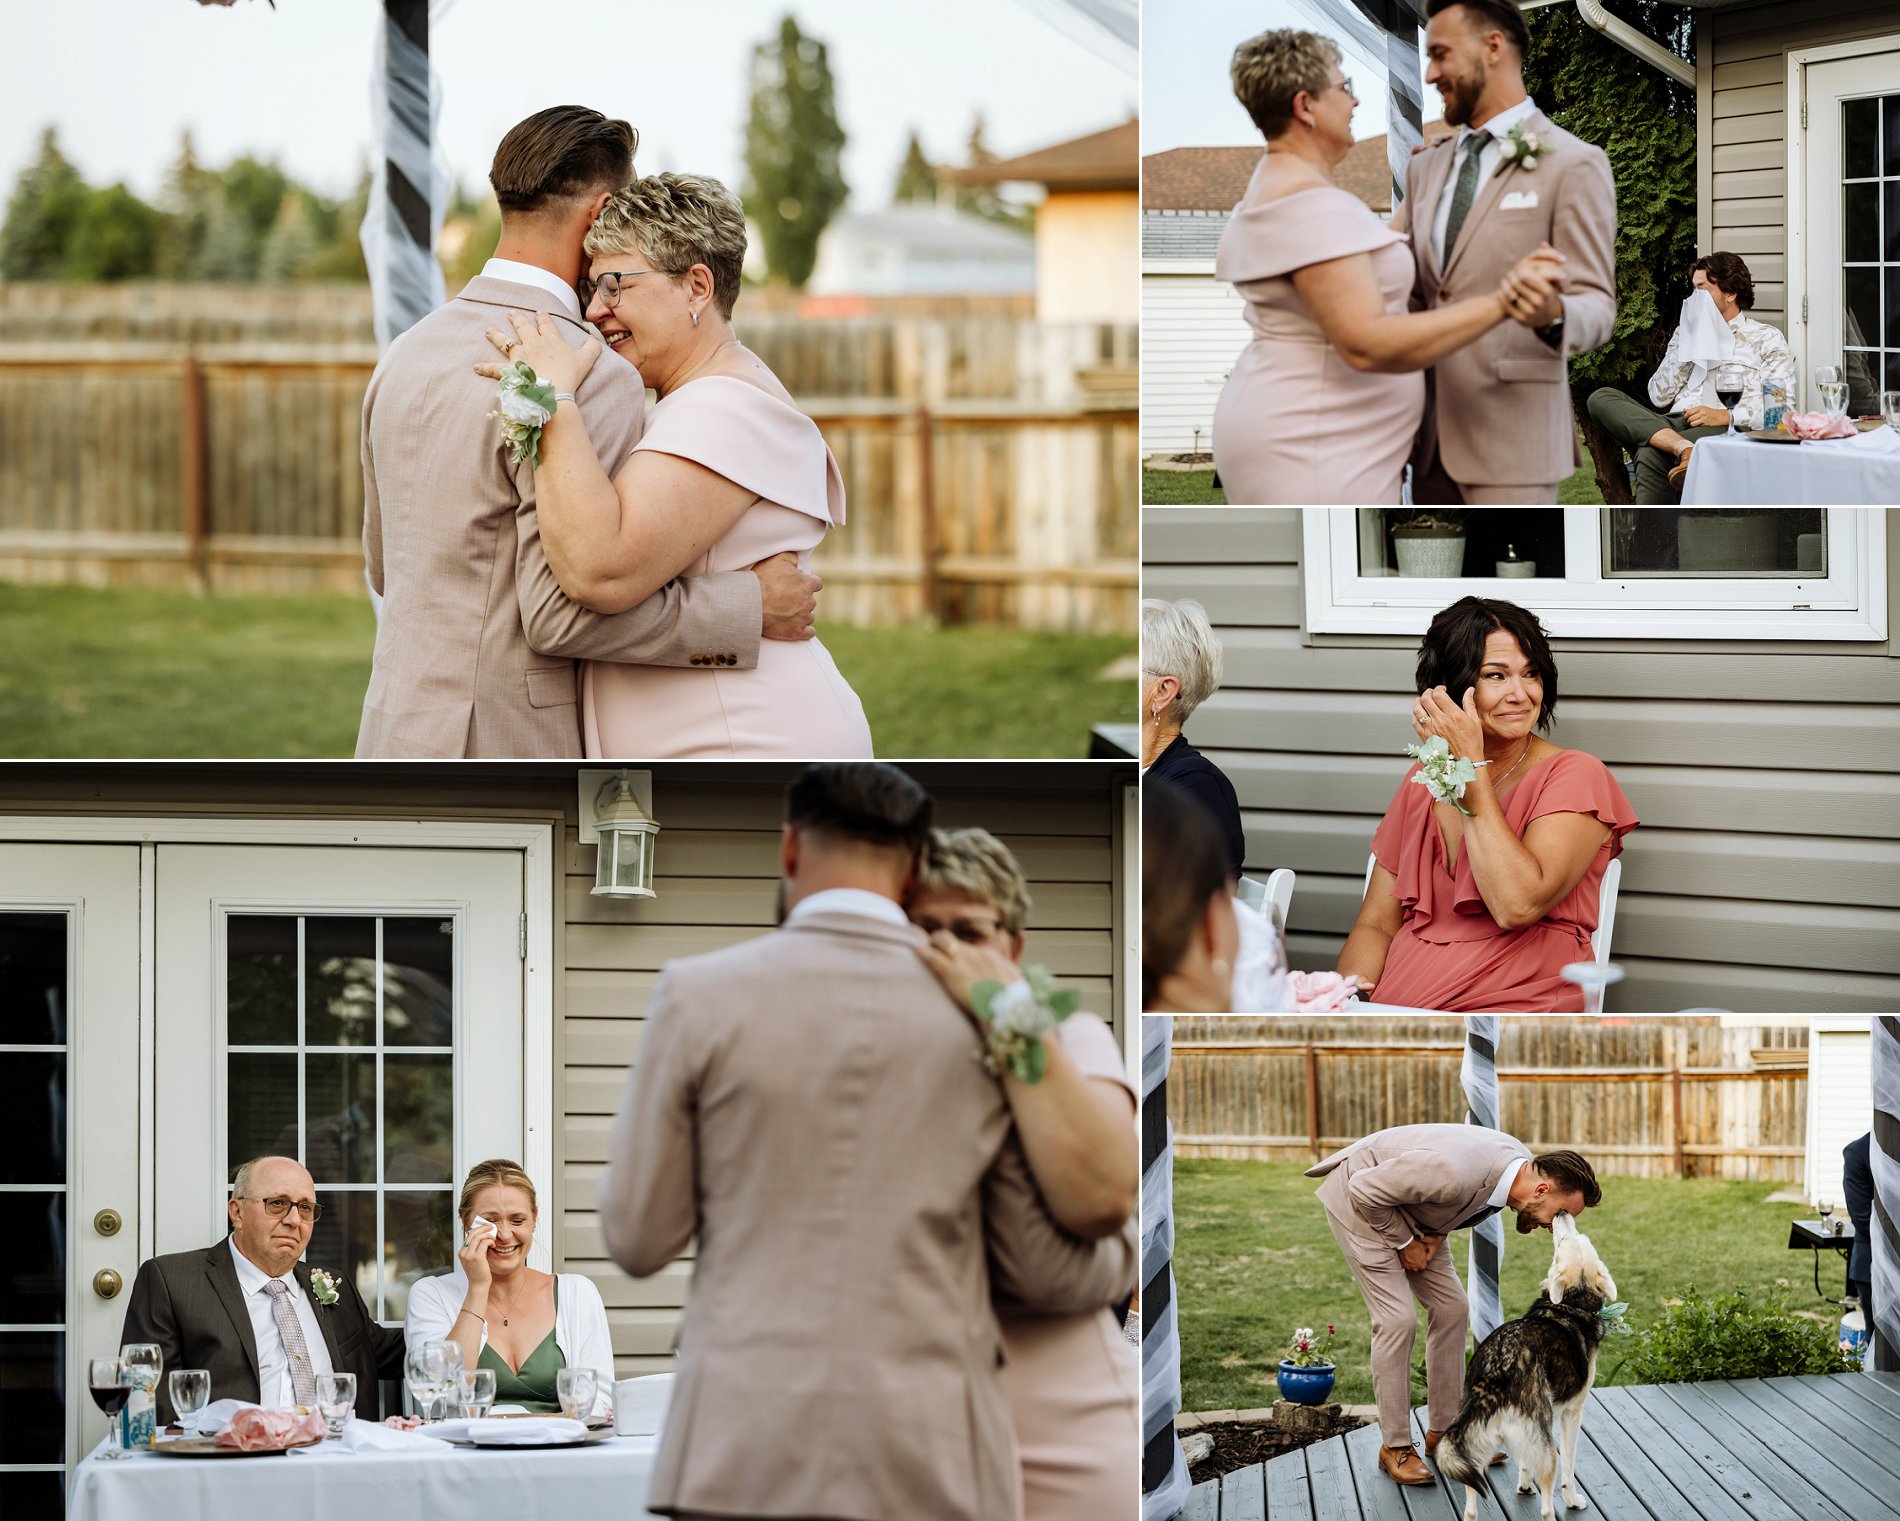 An emotional mother-son dance at a backyard wedding in Saskatoon.